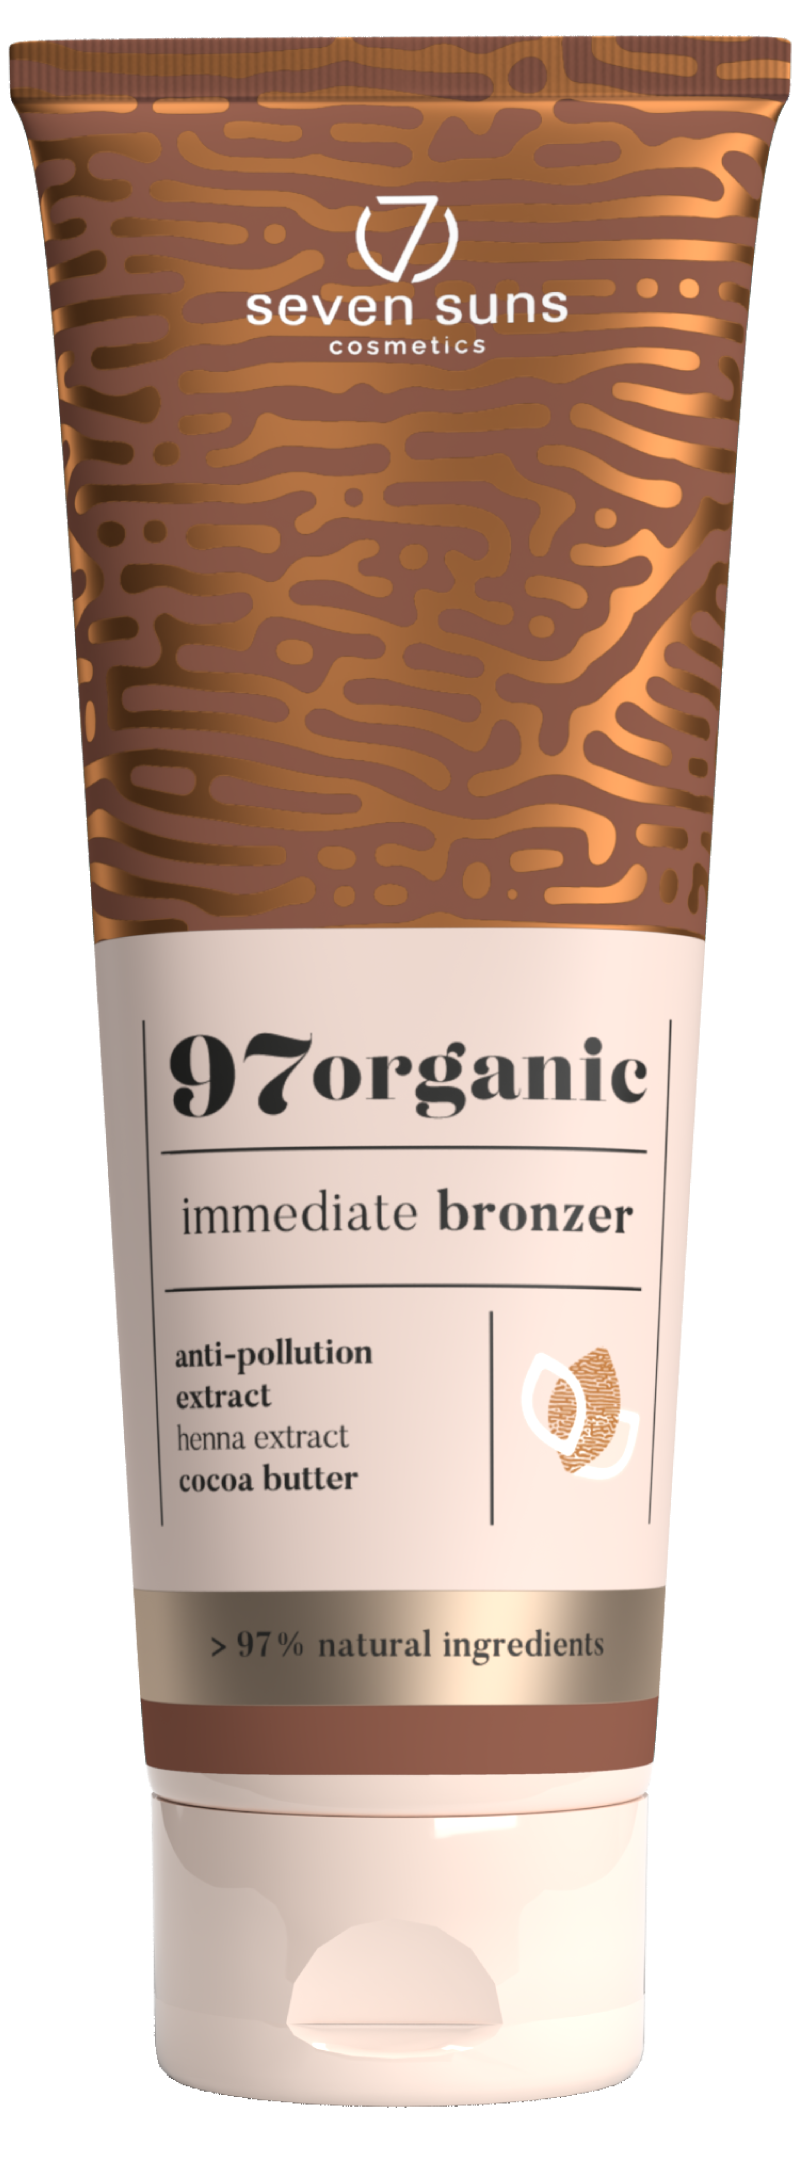 97organic Immediate Bronzer